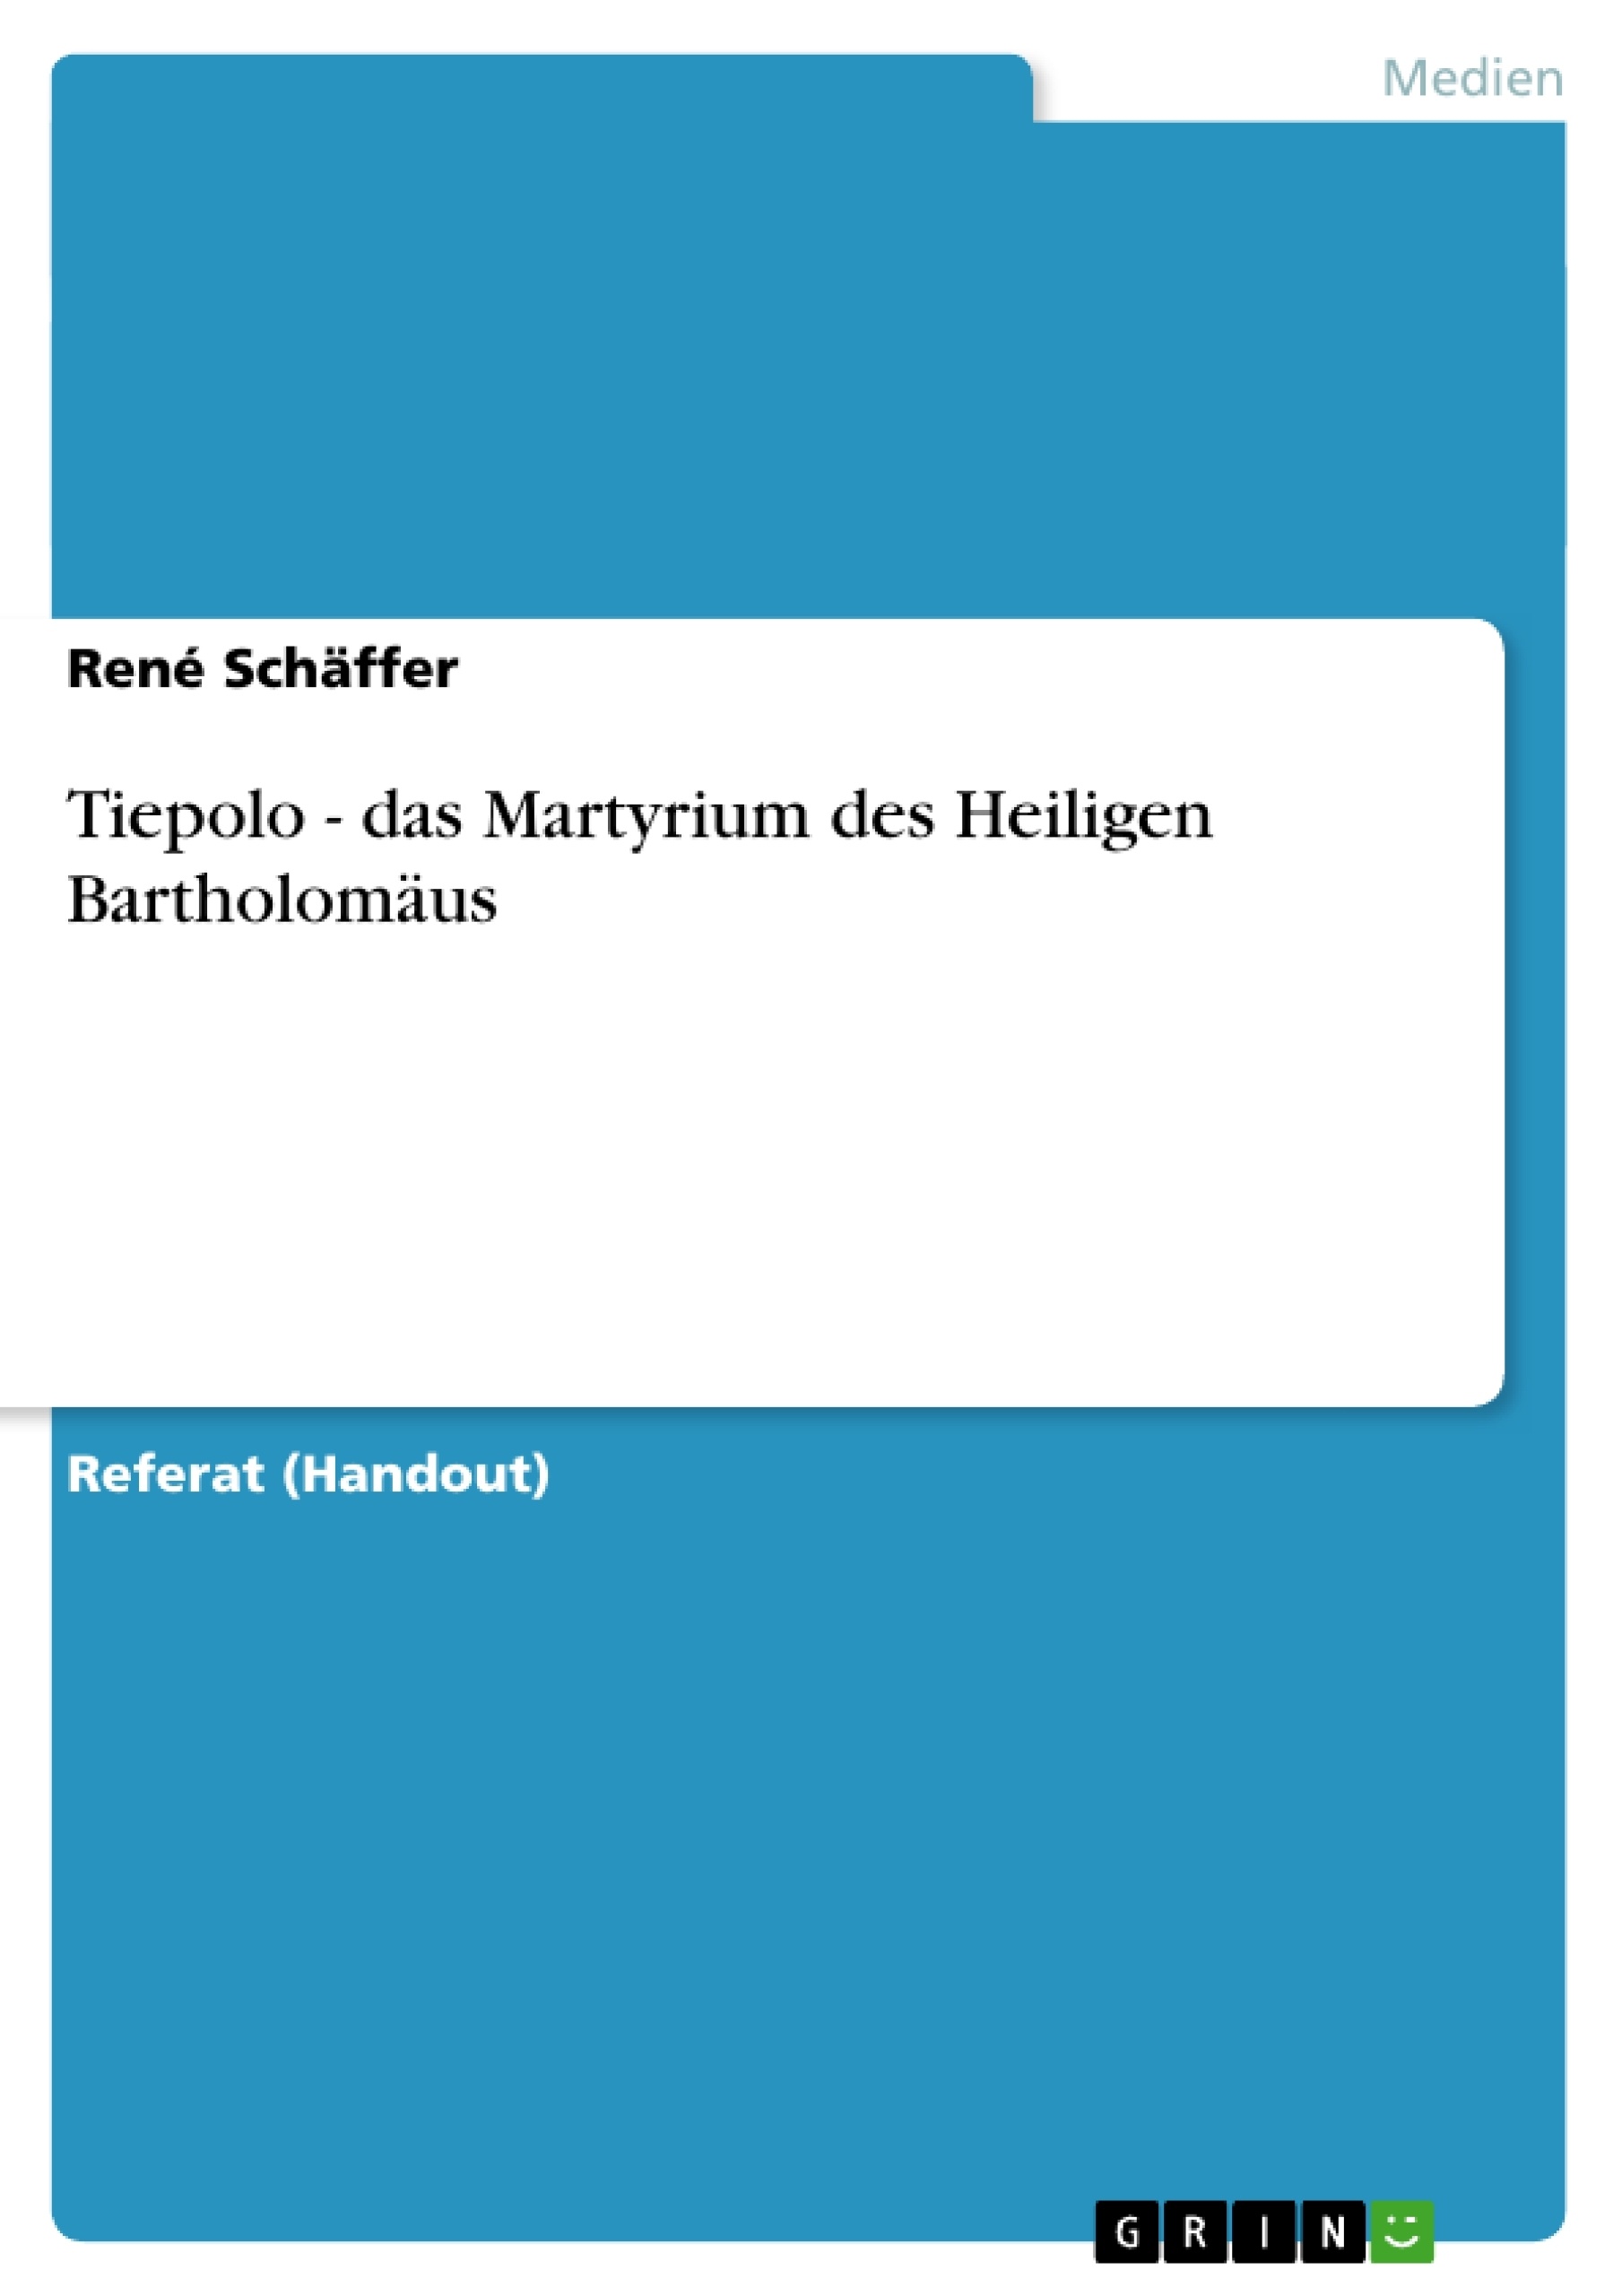 Título: Tiepolo - das Martyrium des Heiligen Bartholomäus